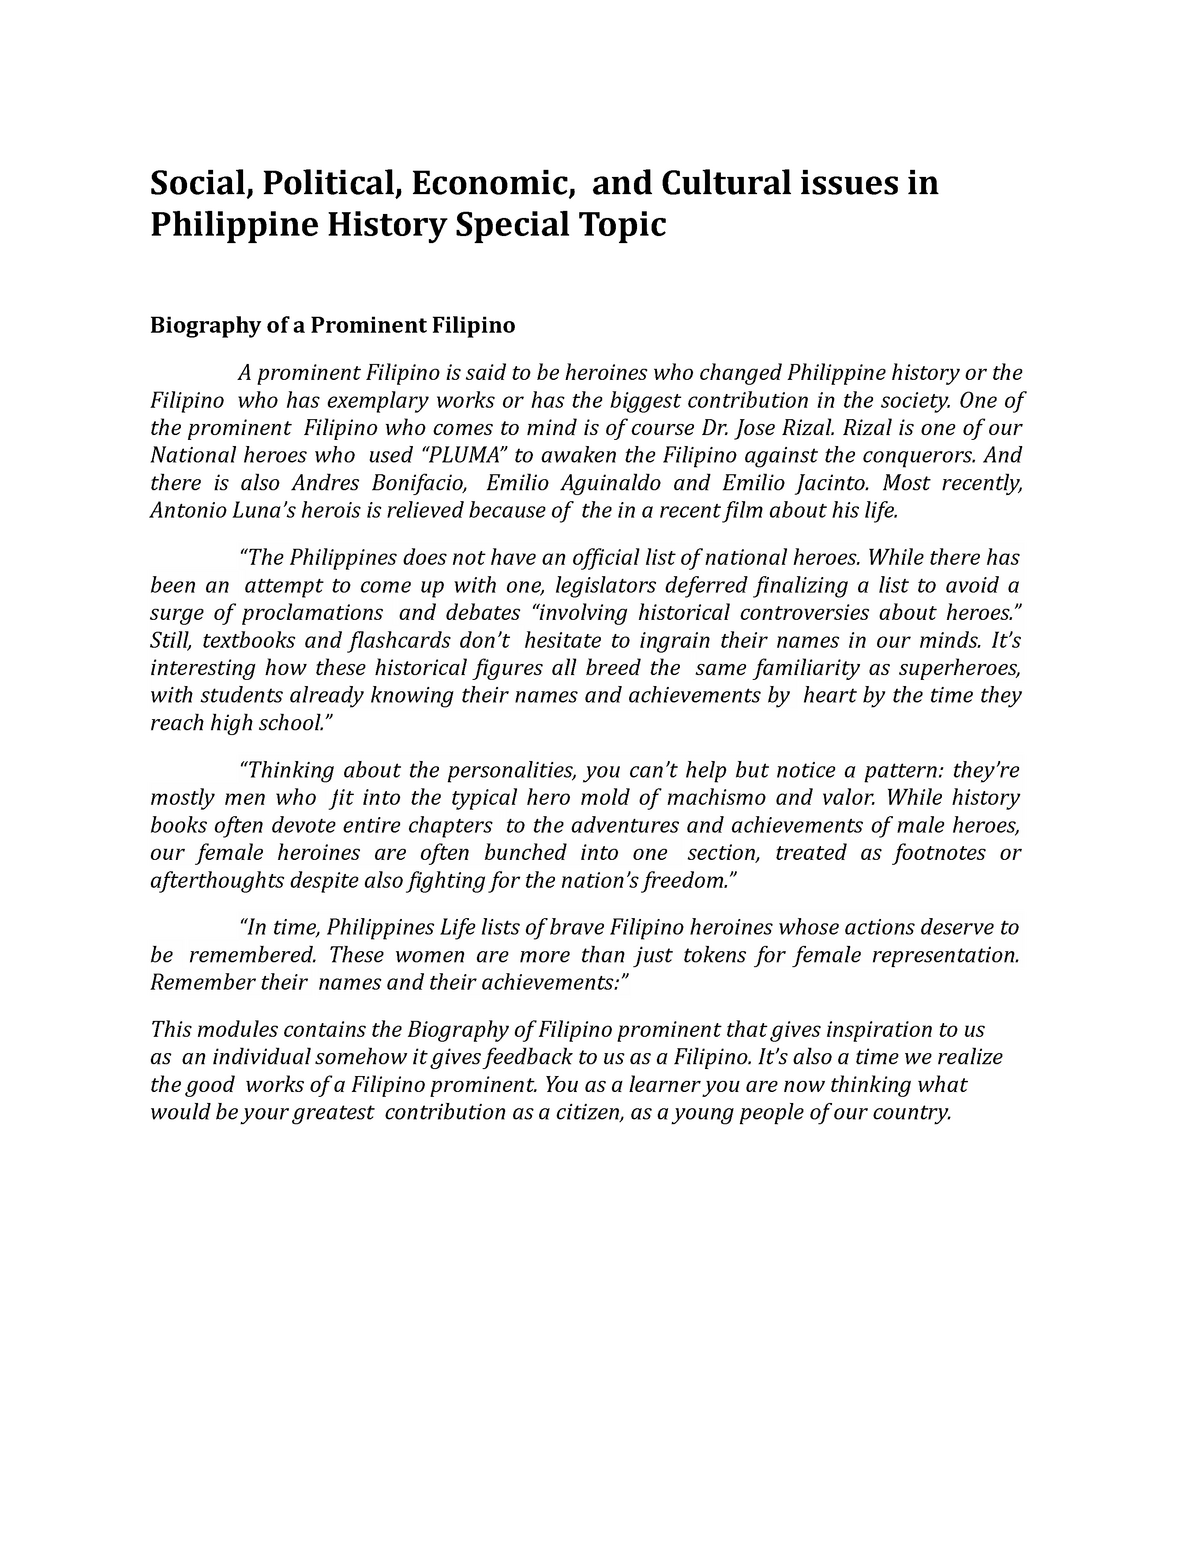 philippine literature importance essay